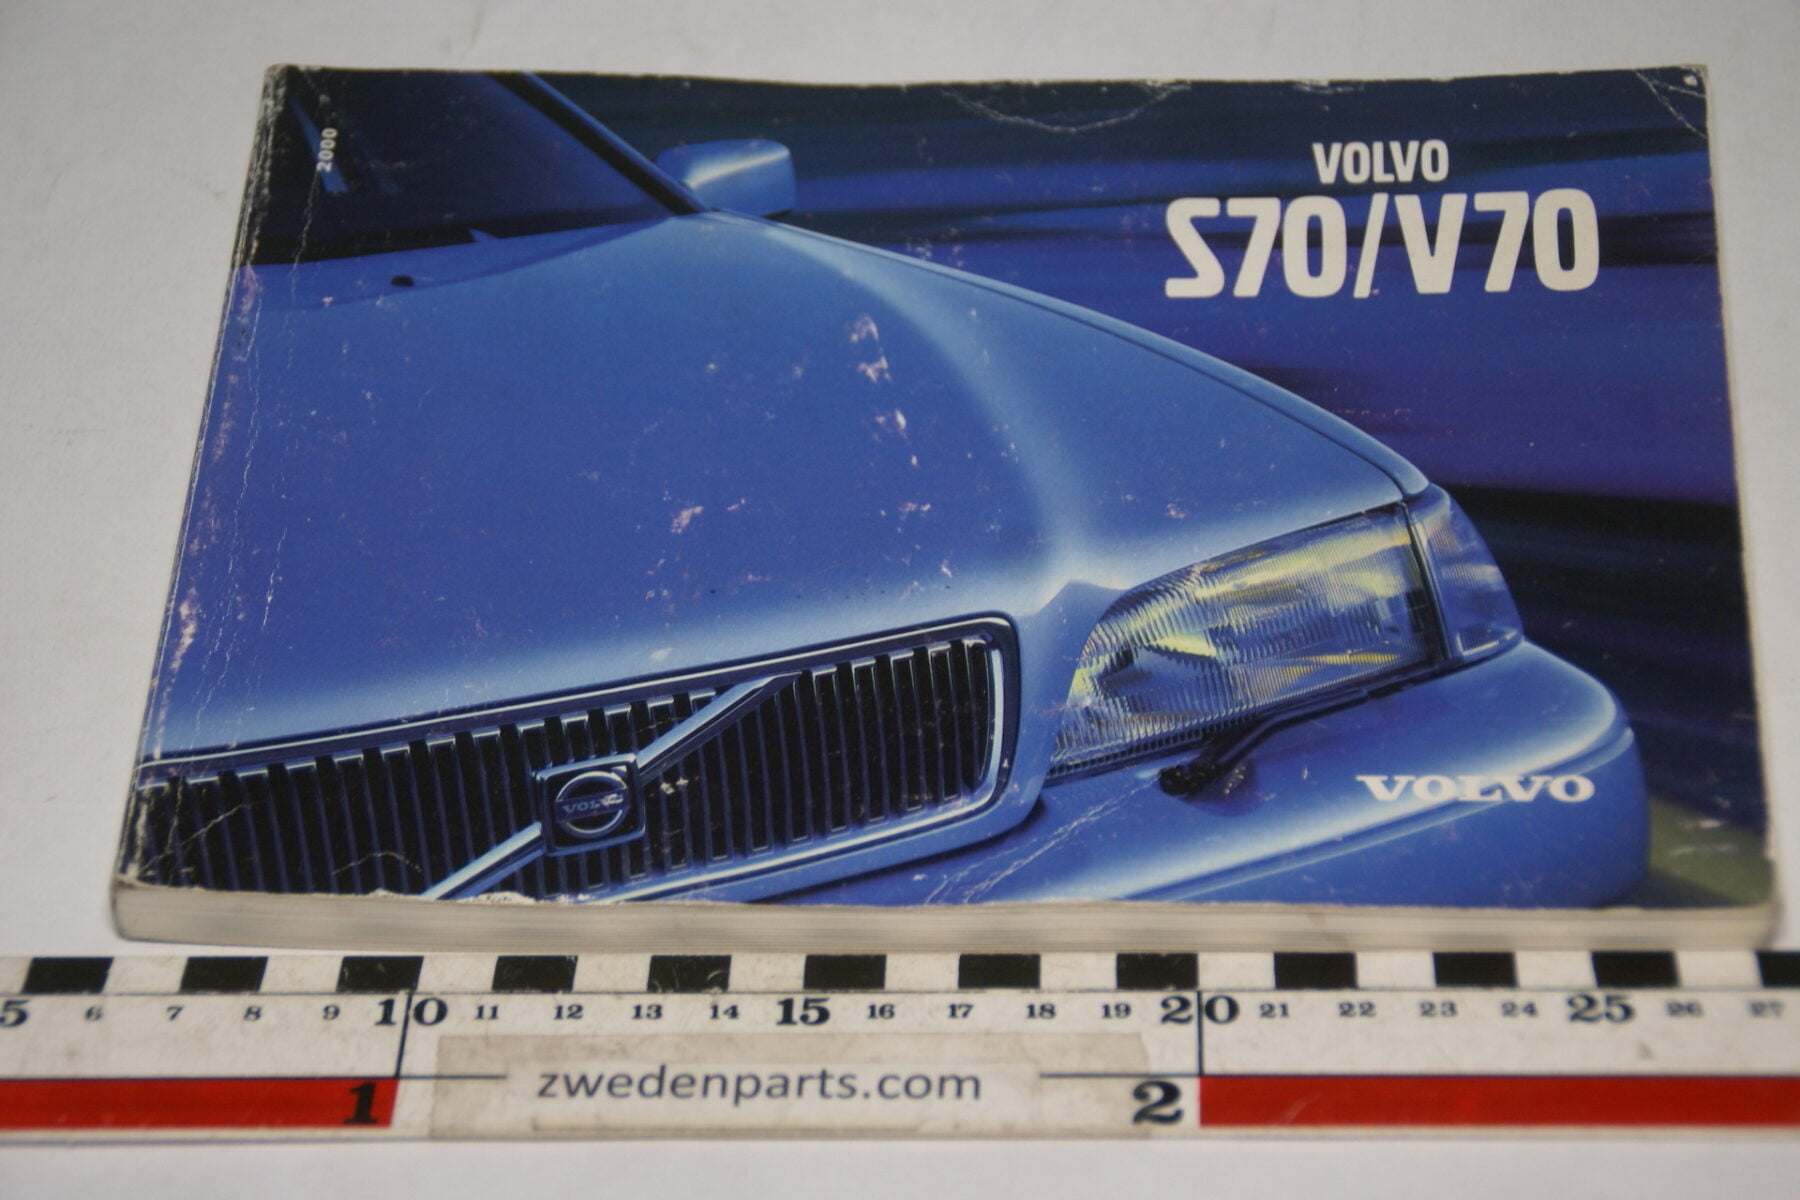 DSC07725 1999 originele instructieboekje Volvo S70 V70 nr TP 4588 Svensk-aa42c2a8